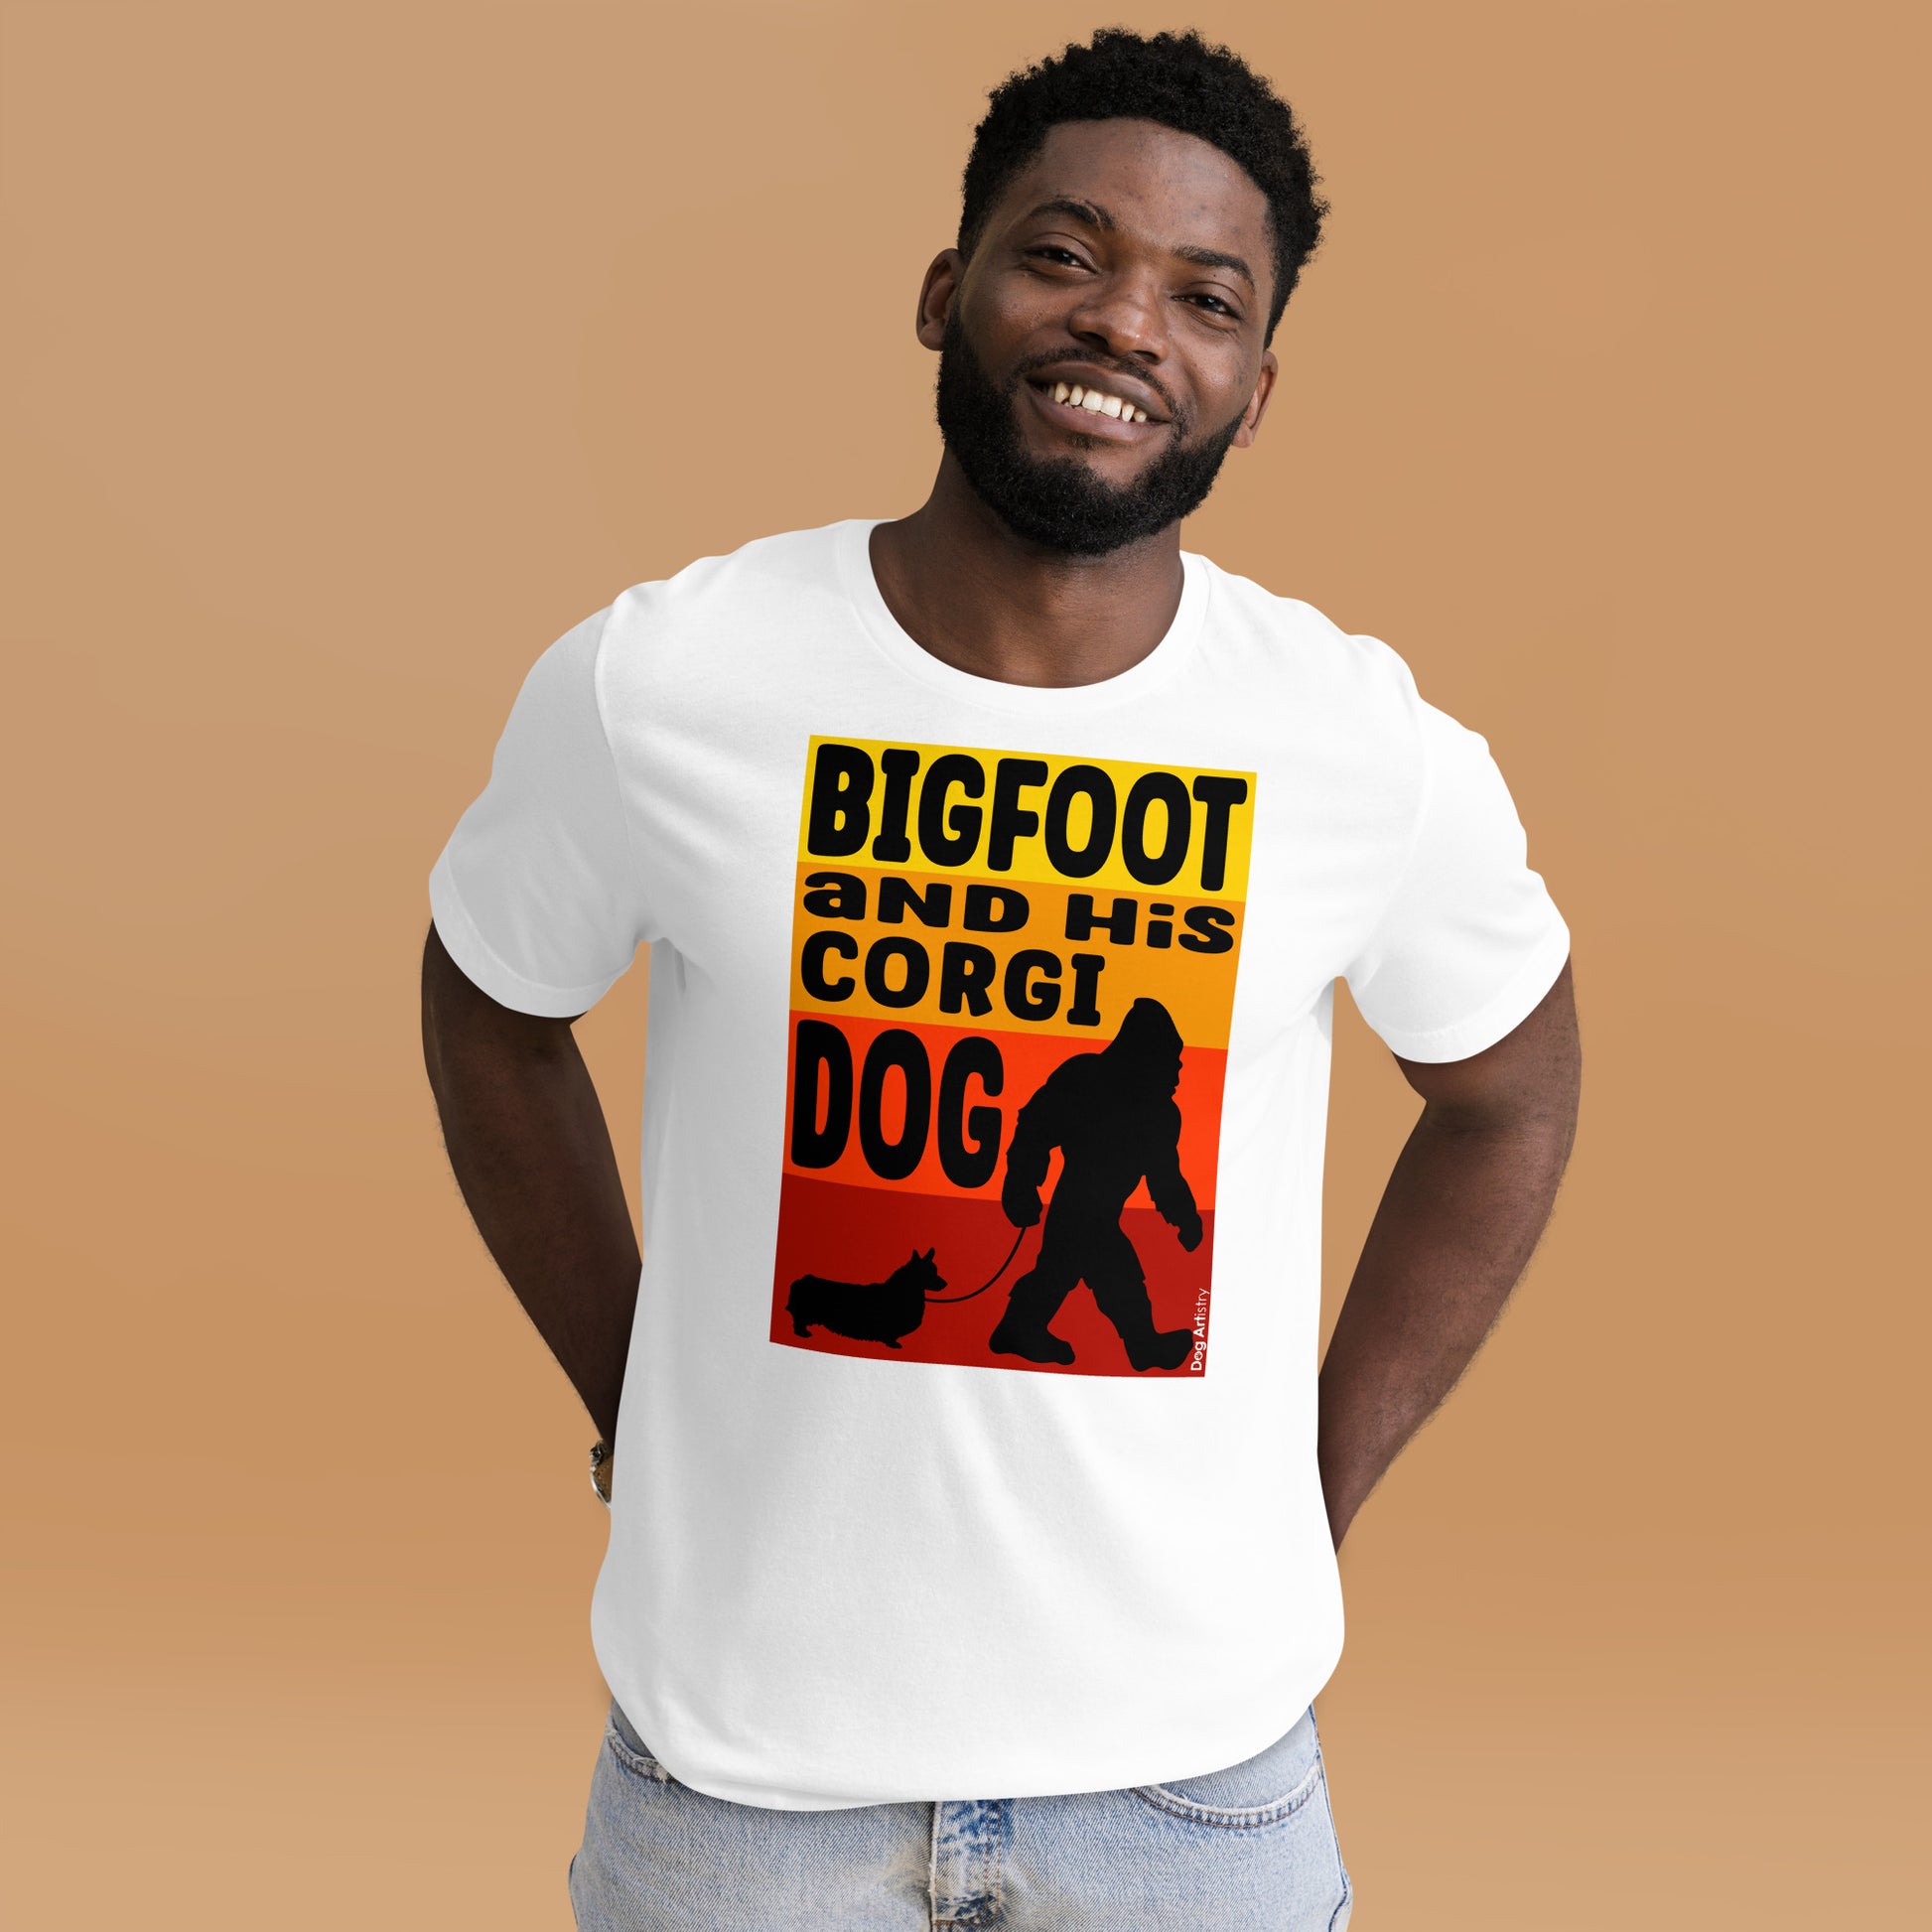 Big foot and his Corgi dog unisex white t-shirt by Dog Artistry.